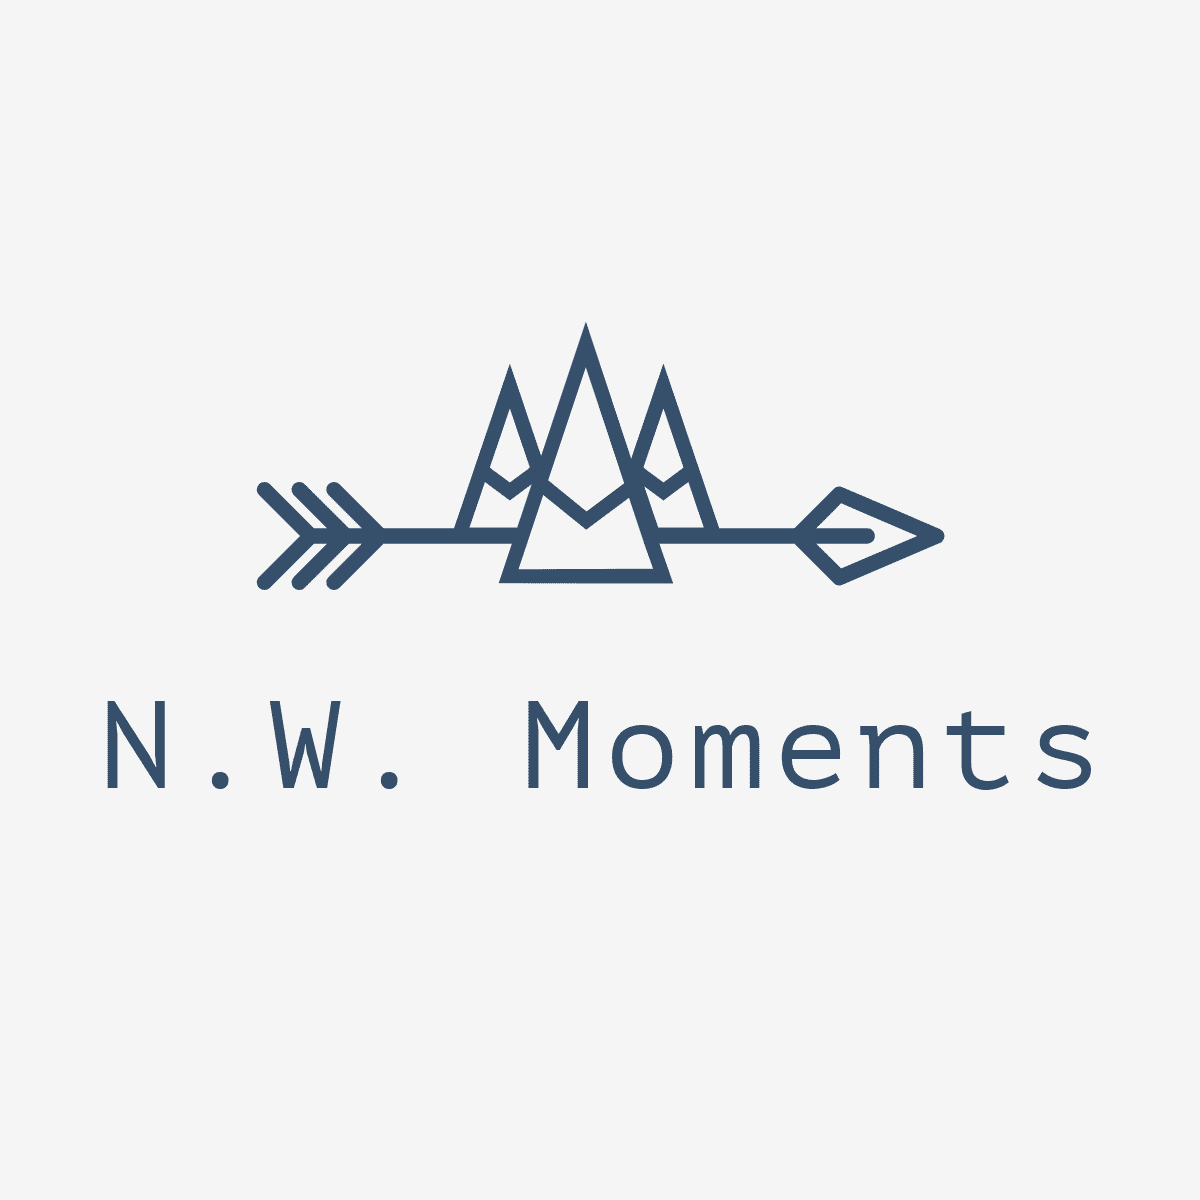 N.W. Moments